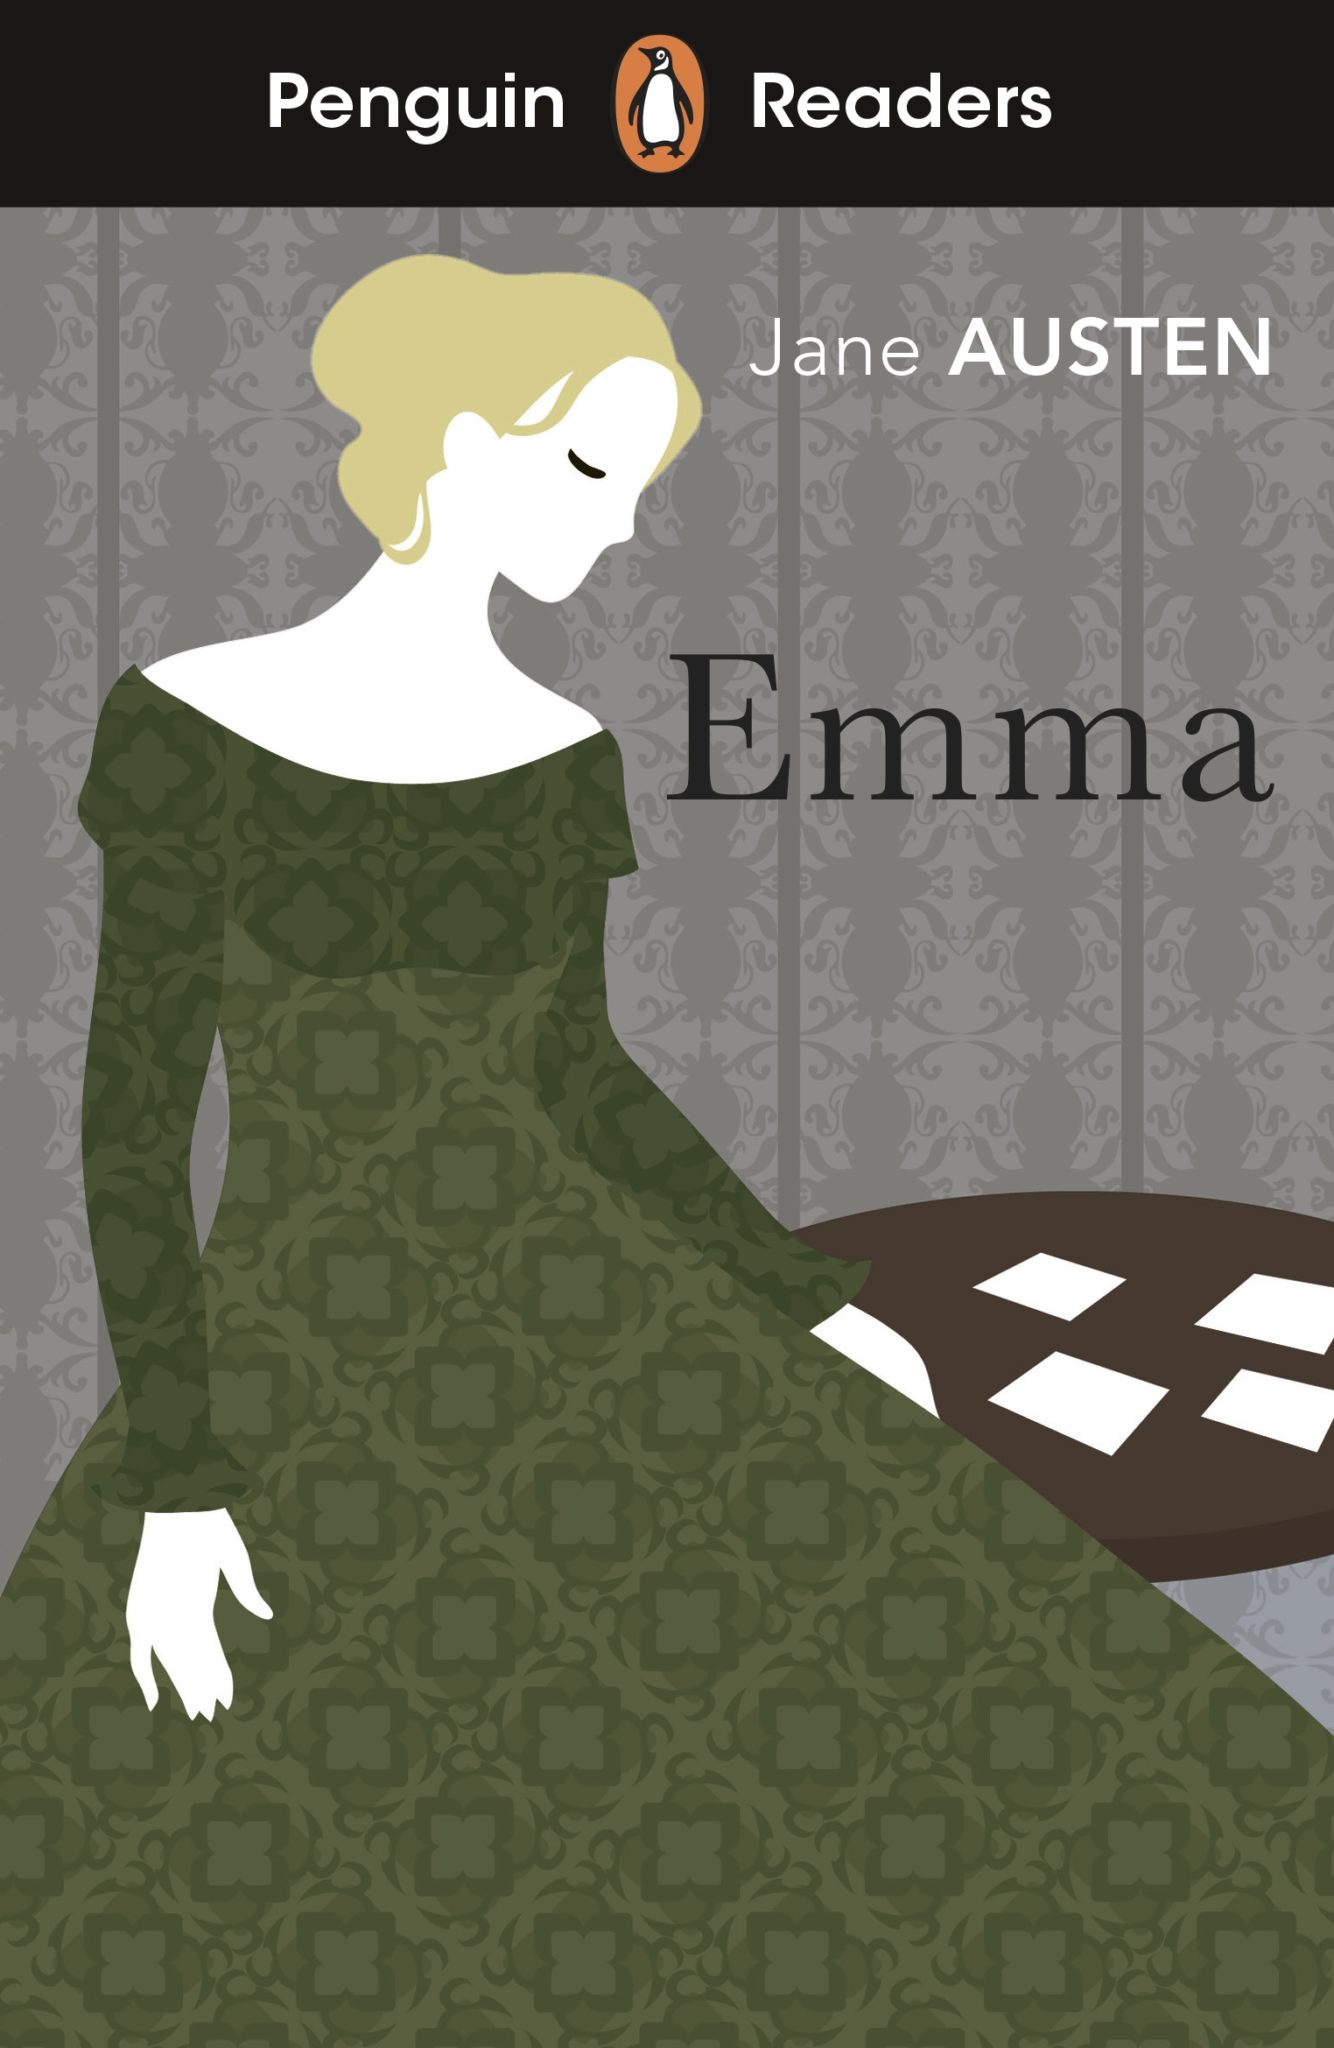 Penguin Readers for EAL: Level 4 Emma